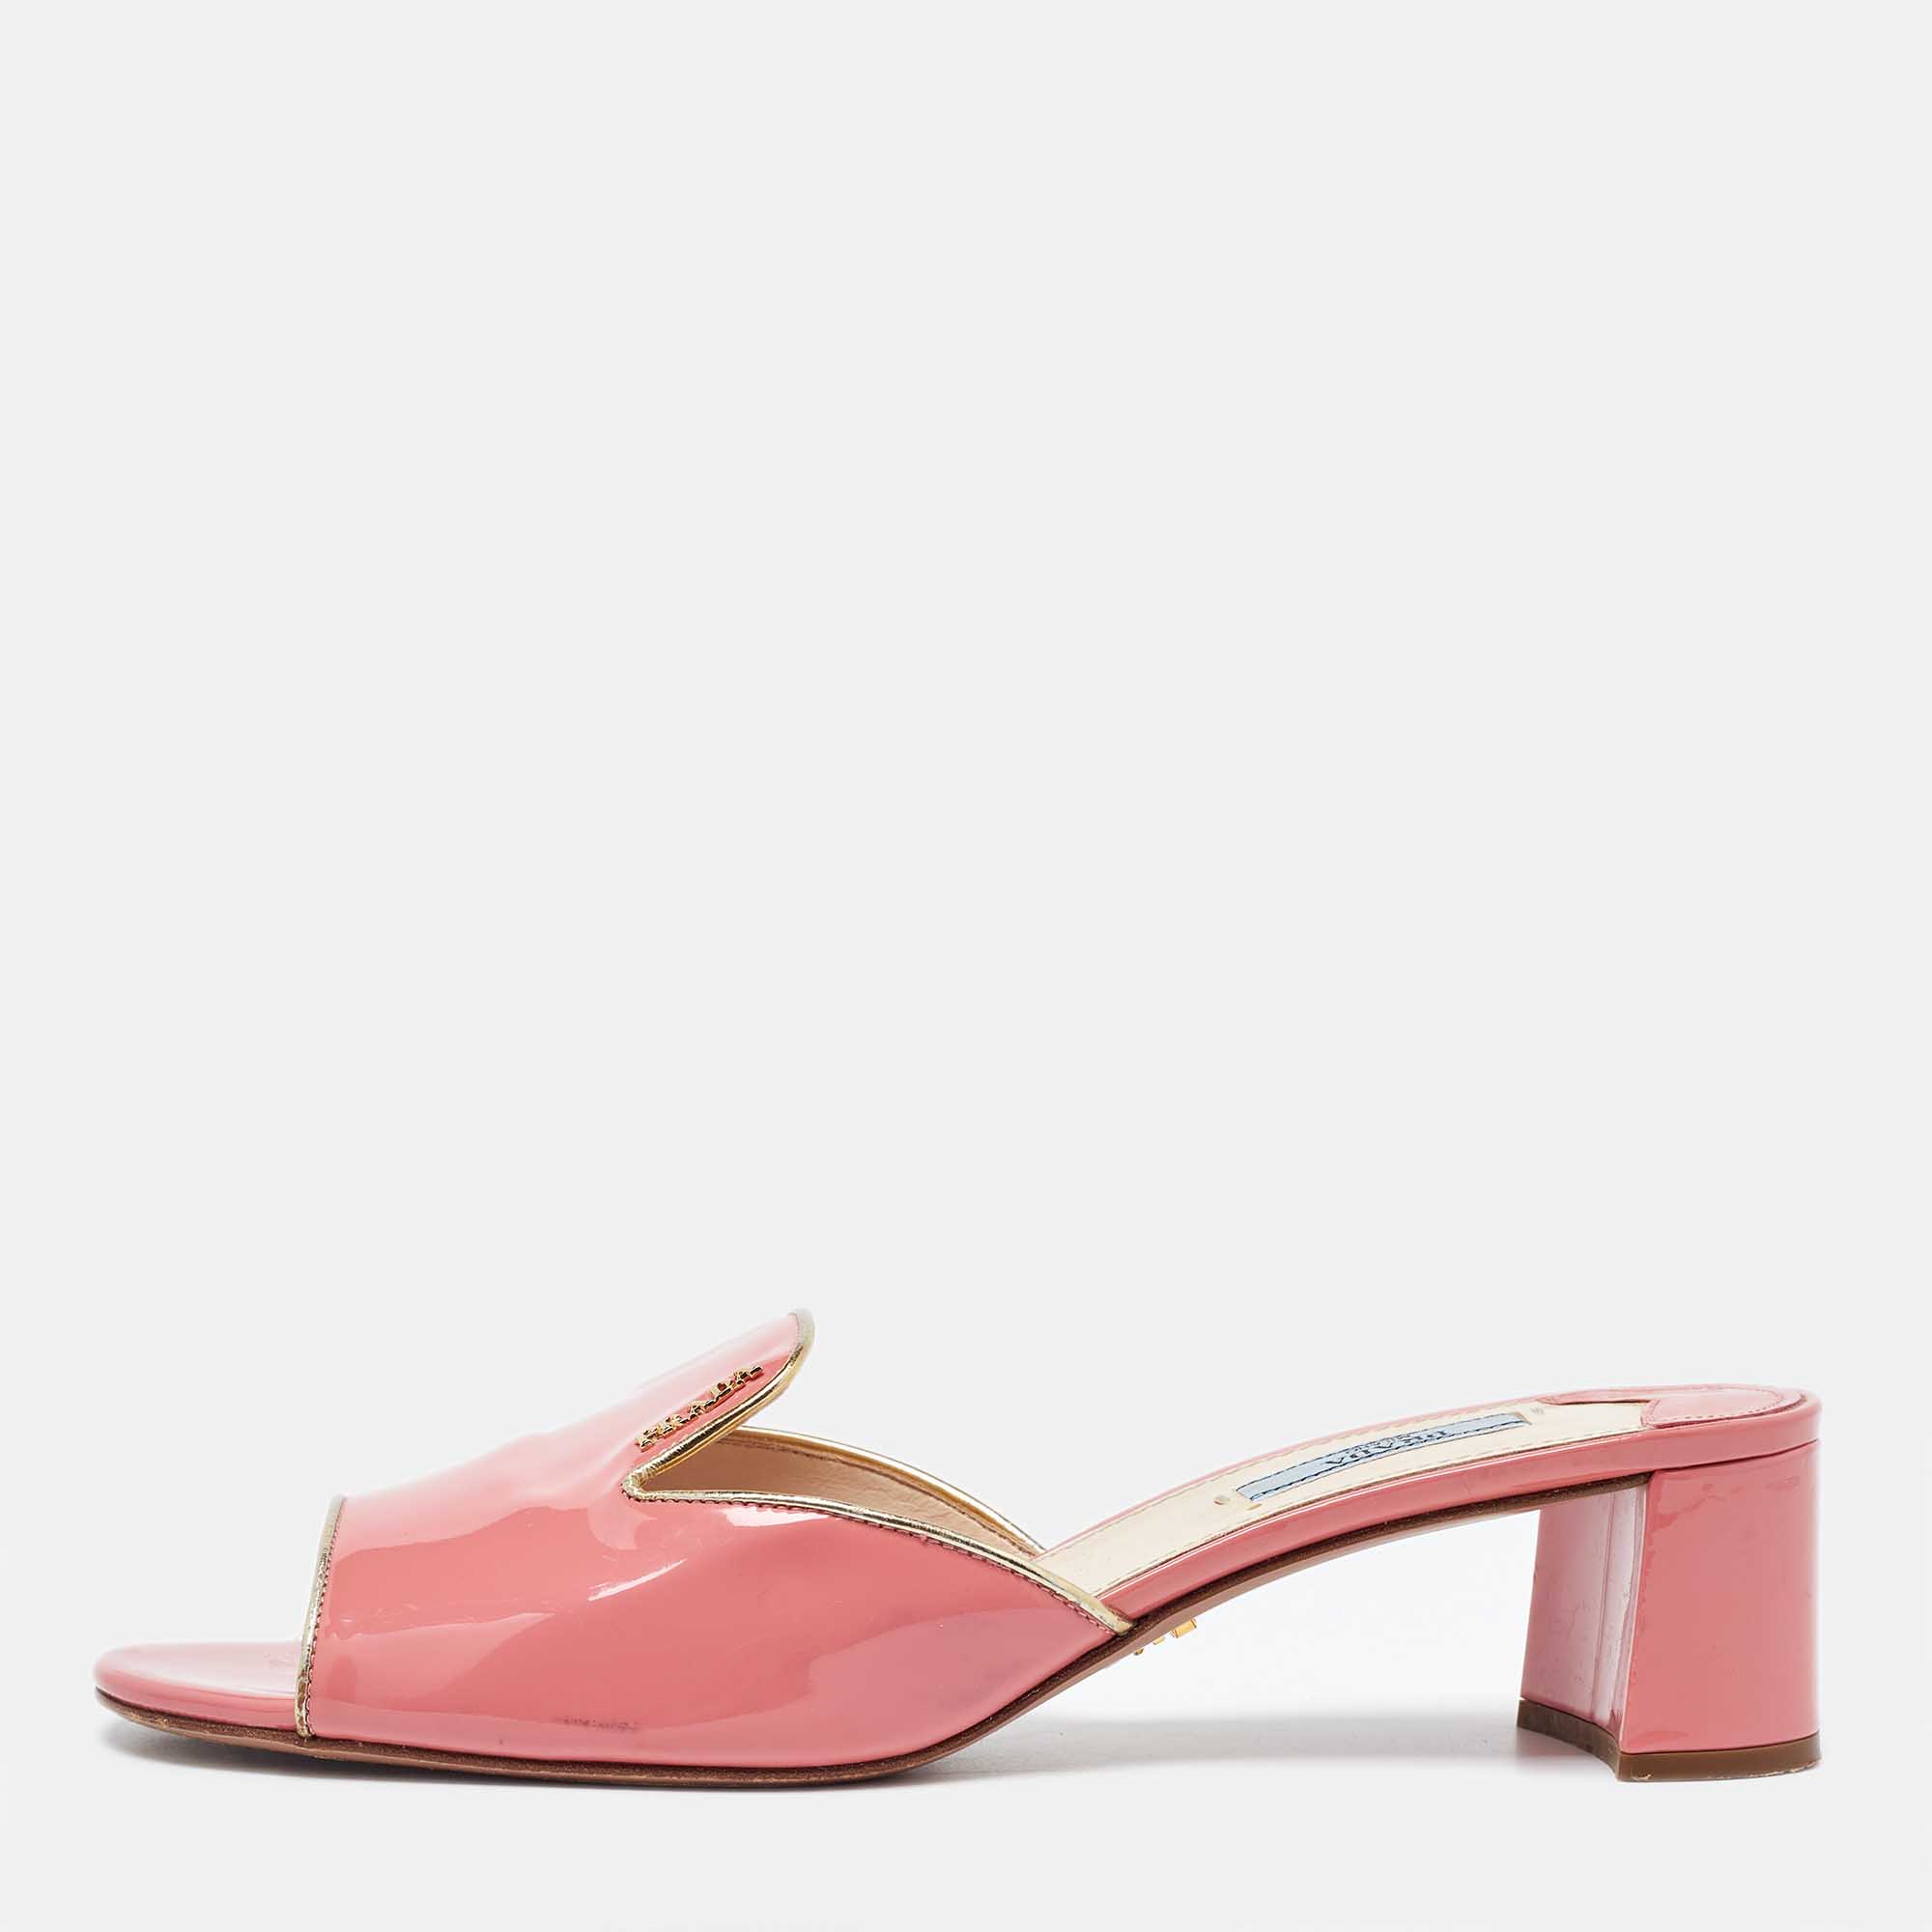 Prada pink patent leather block heel open toe slide sandals size 41